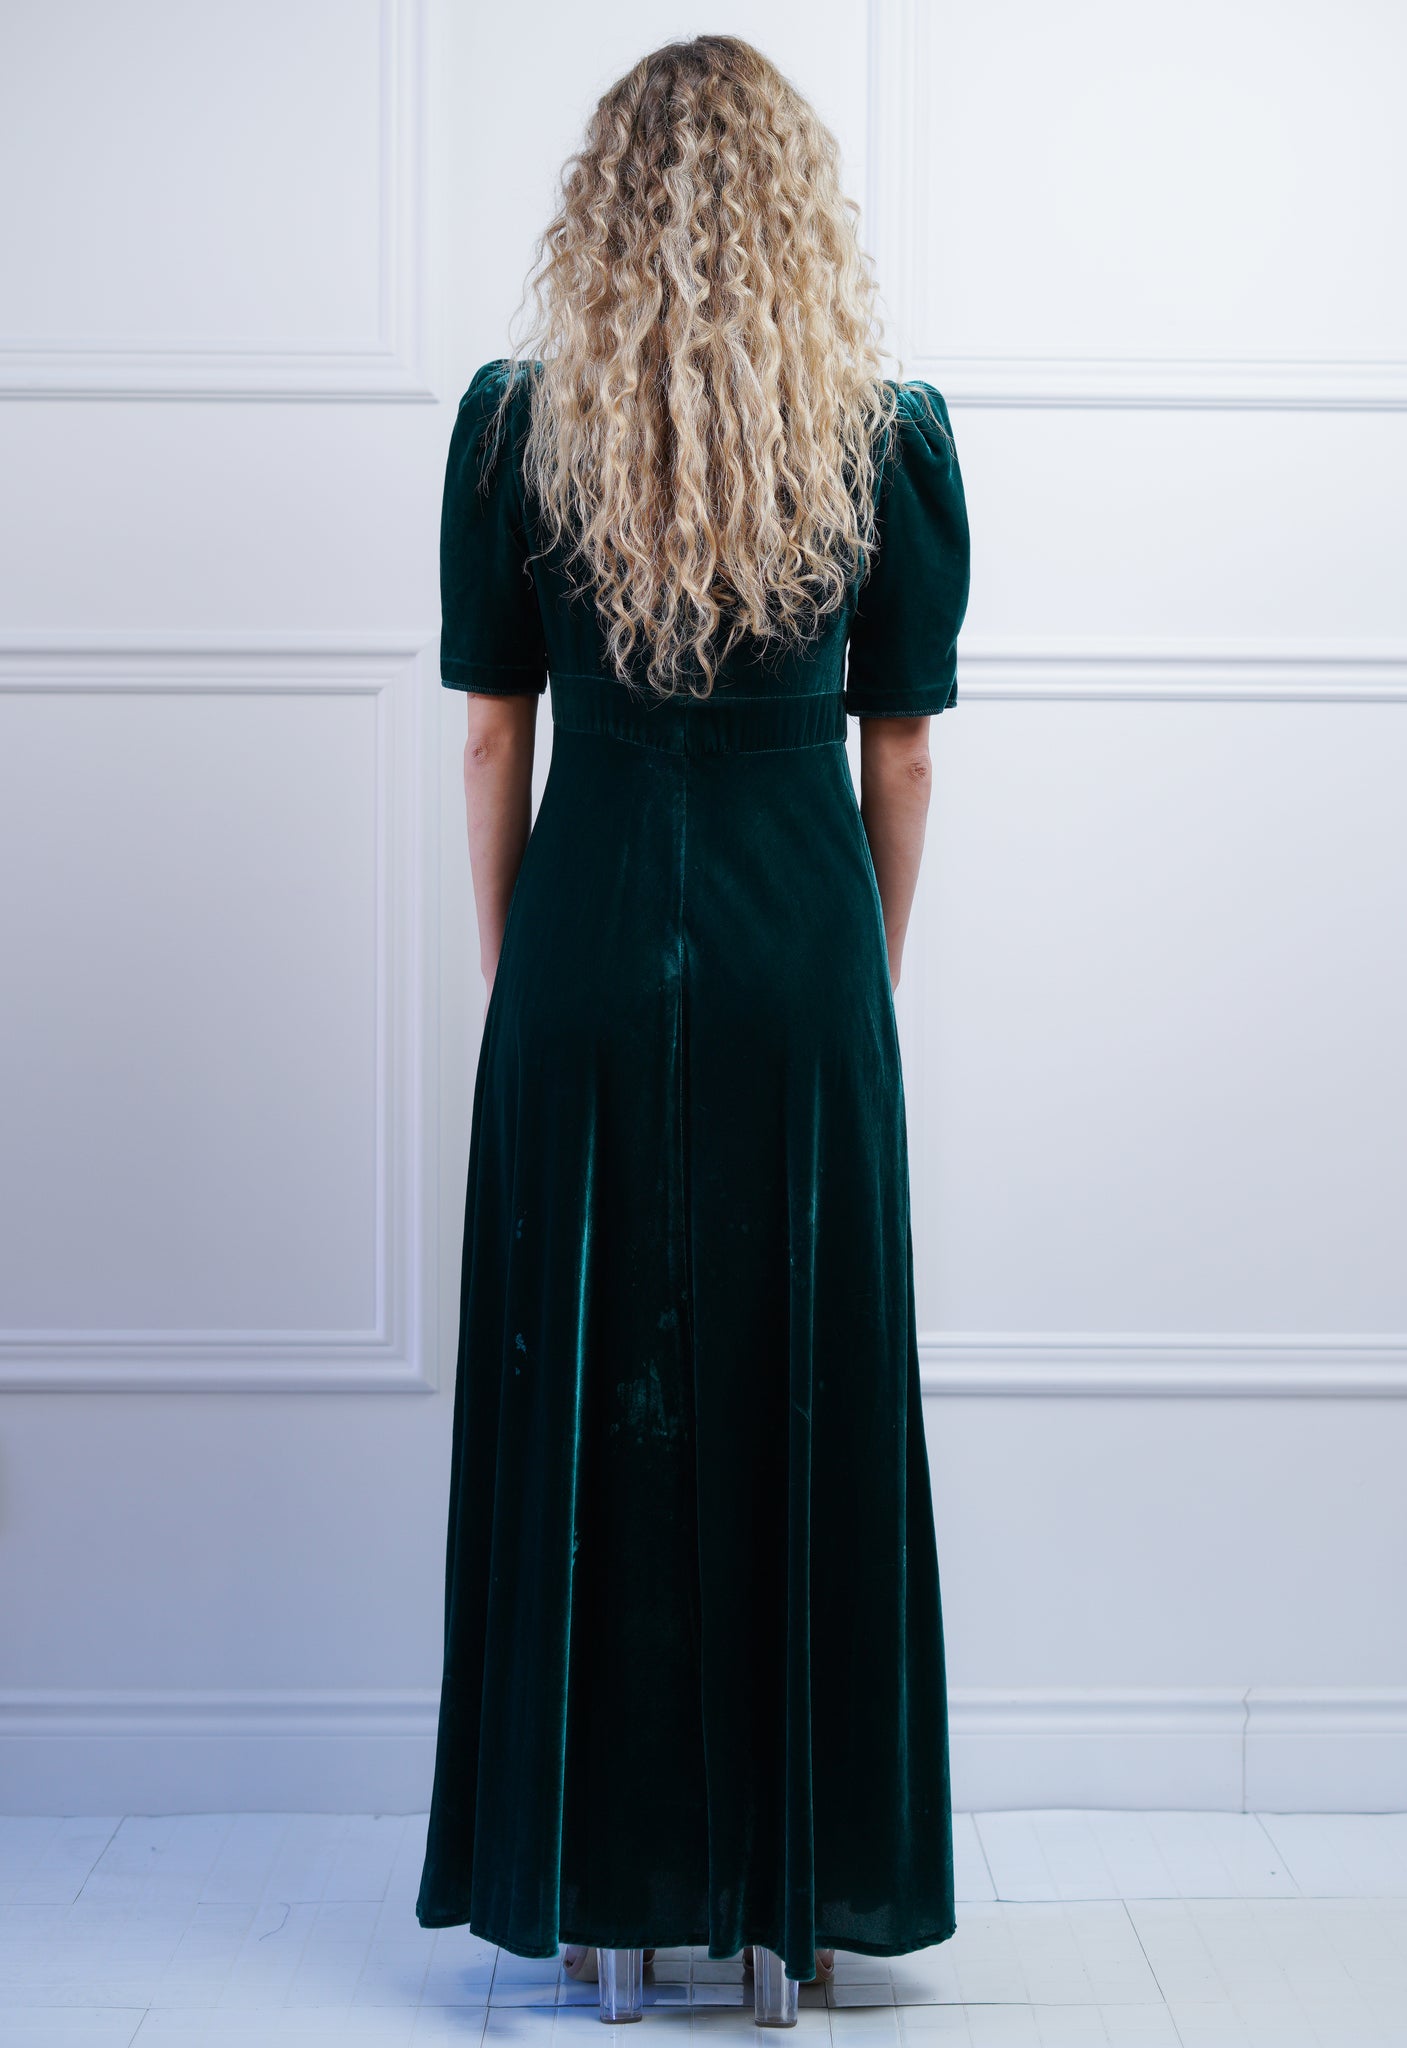 Long Green Dress - Rental 